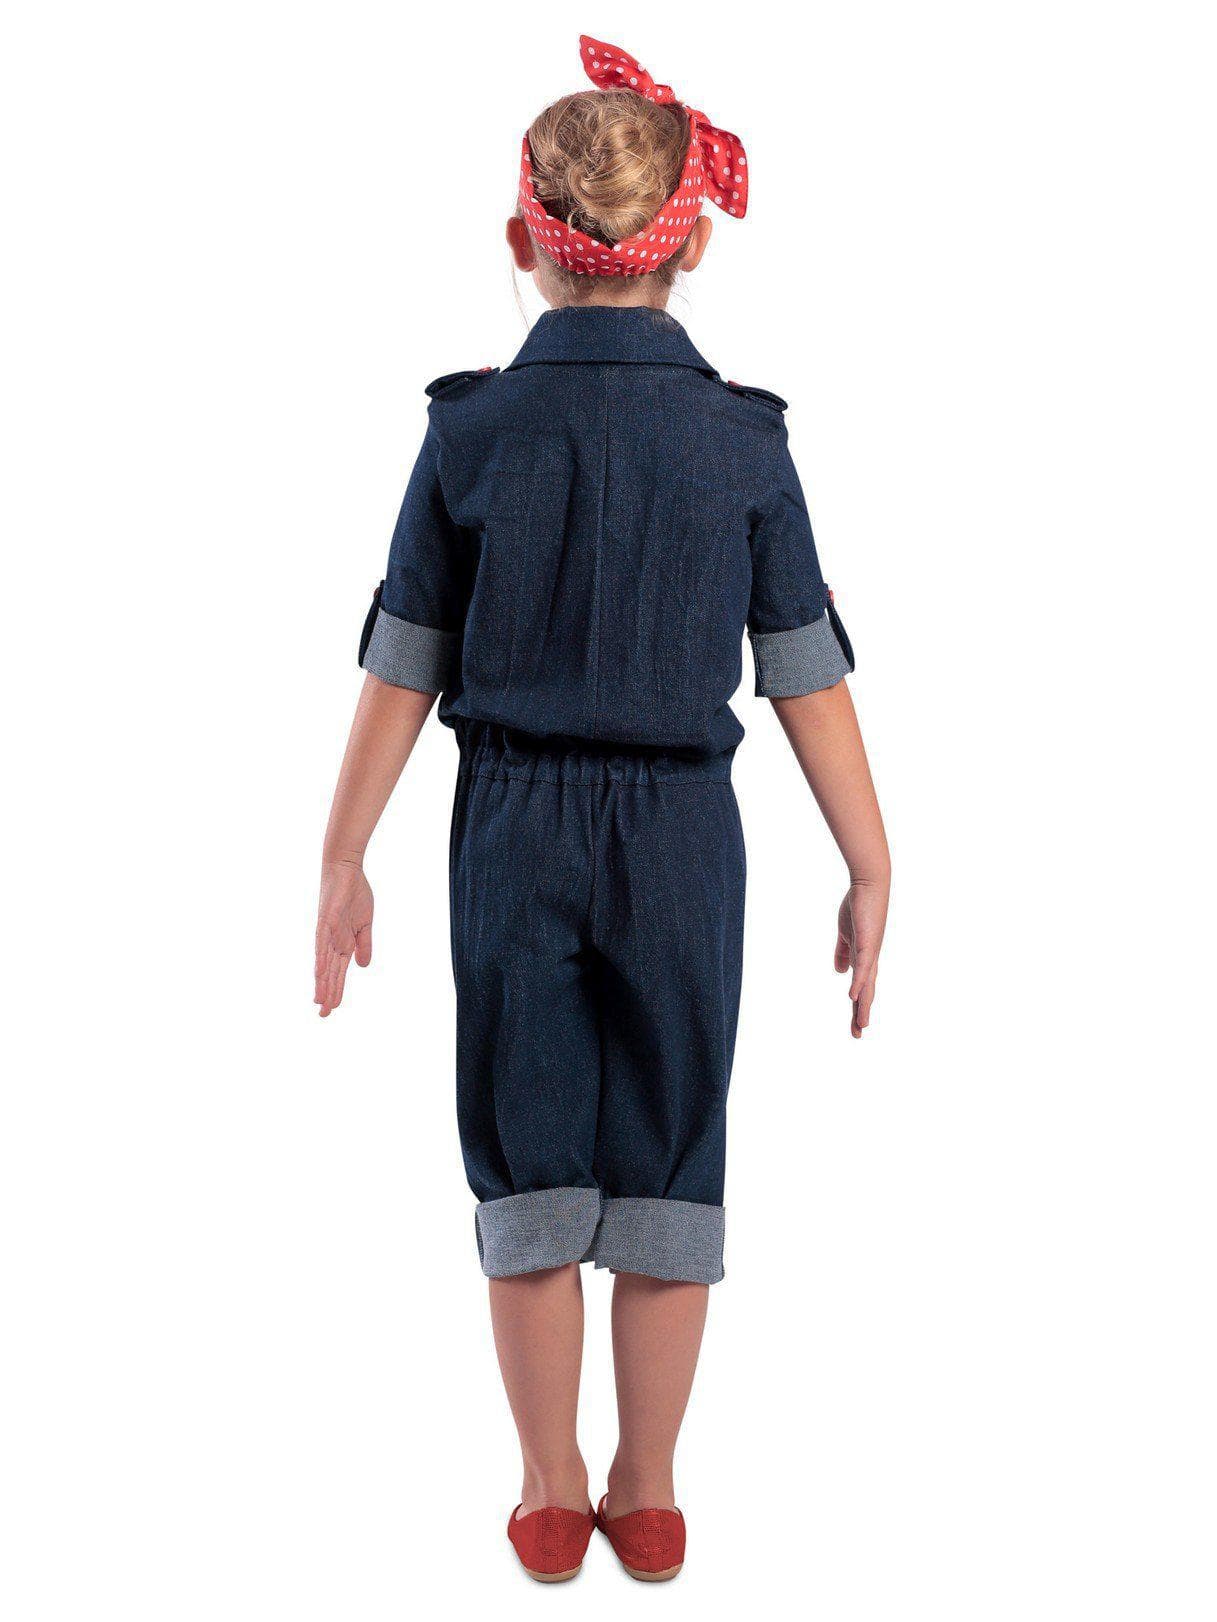 Kid's Rosie the Riveter Costume - costumes.com